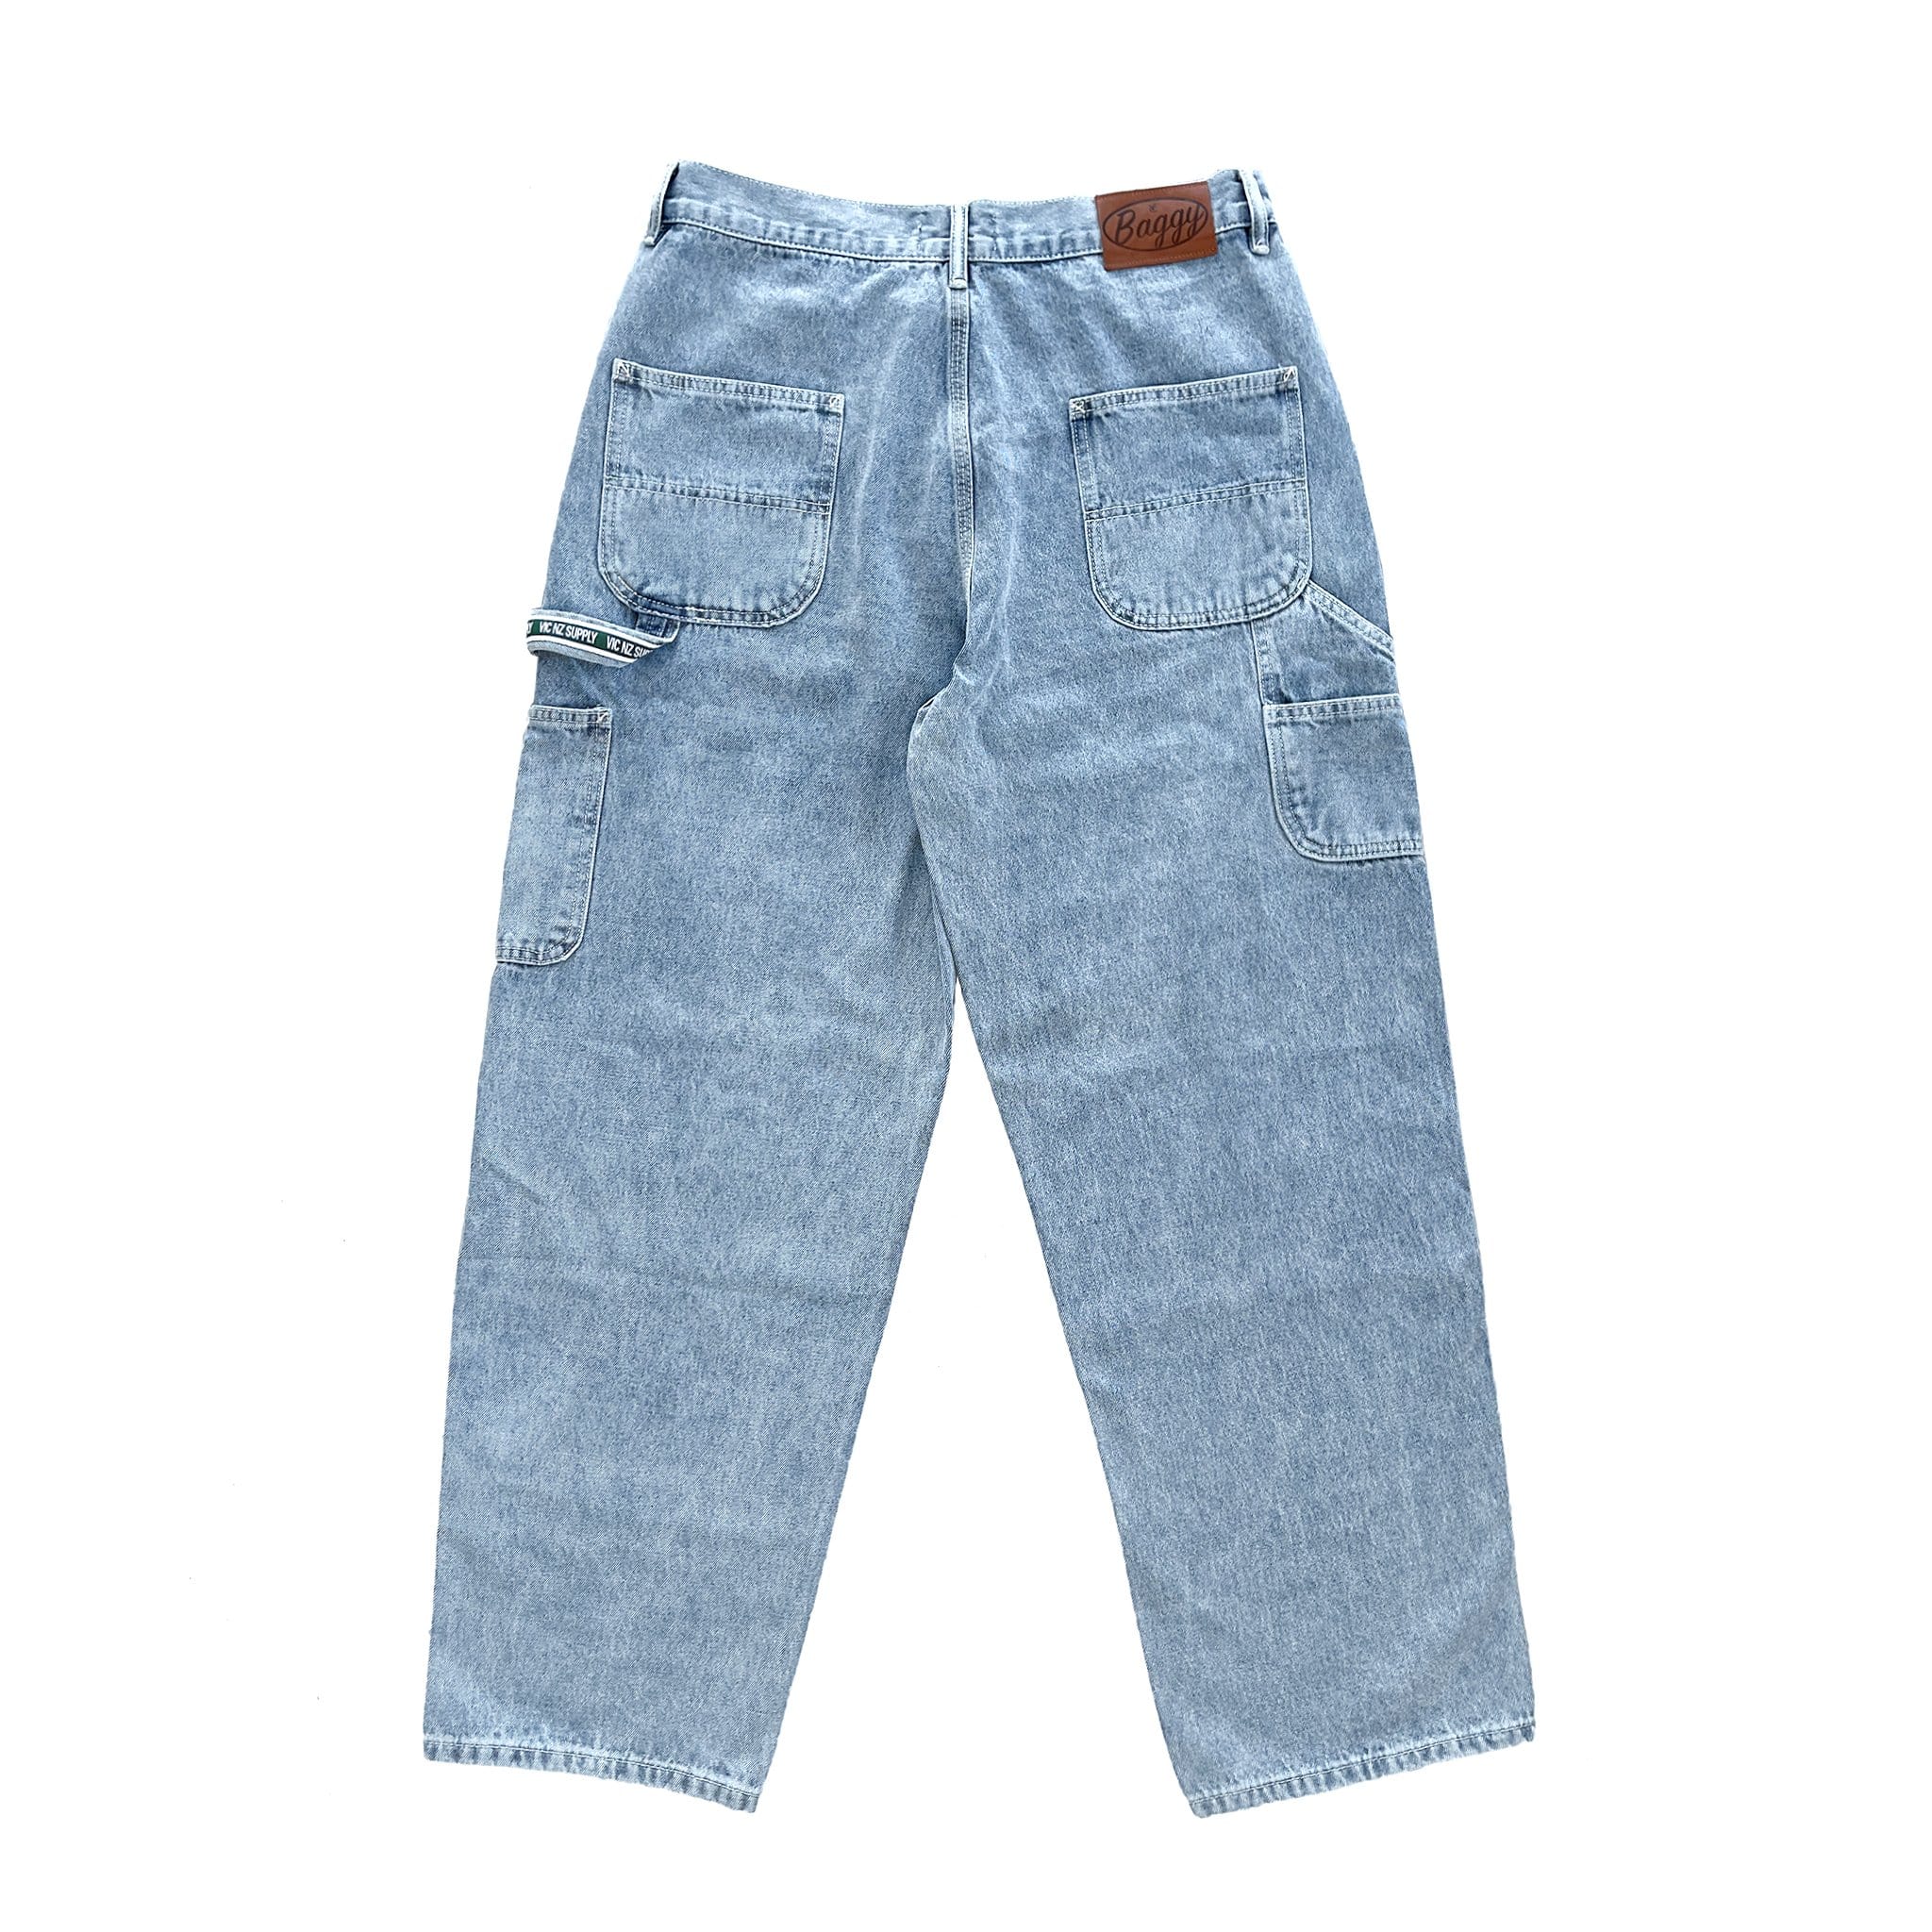 Guess Originals carpenter jeans in mid wash | ASOS